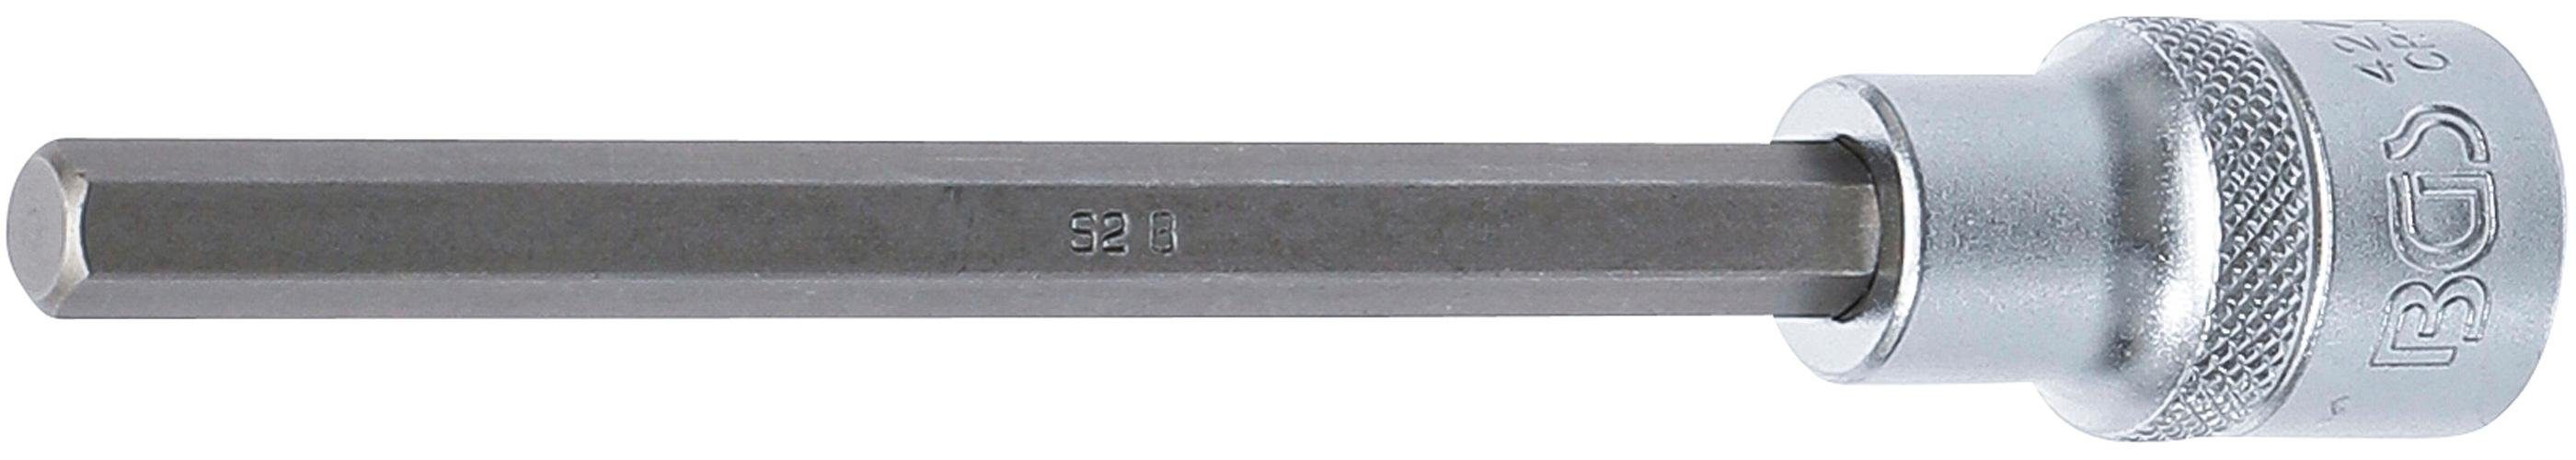 BGS technic Sechskant-Bit Bit-Einsatz, Länge 140 mm, Antrieb Innenvierkant 12,5 mm (1/2), Innensechskant 8 mm